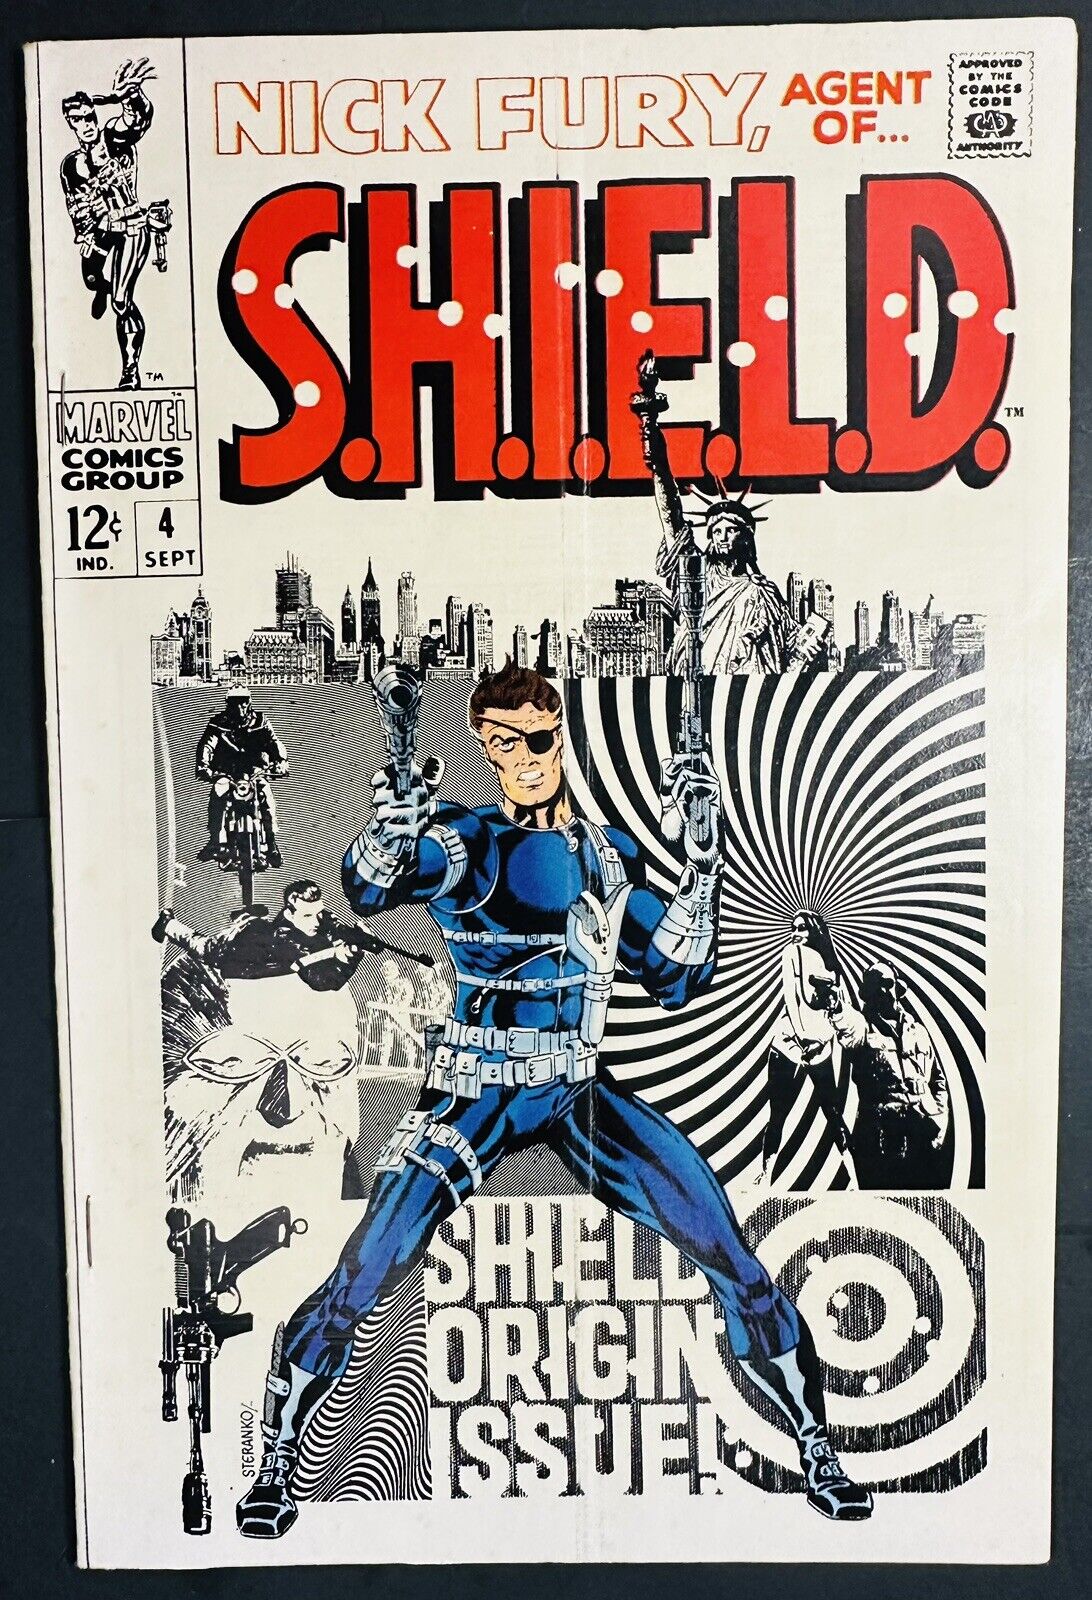 Nick Fury Agent of Shield #4 - SHIELD ORIGIN ISSUE Marvel Comics 1968 VF